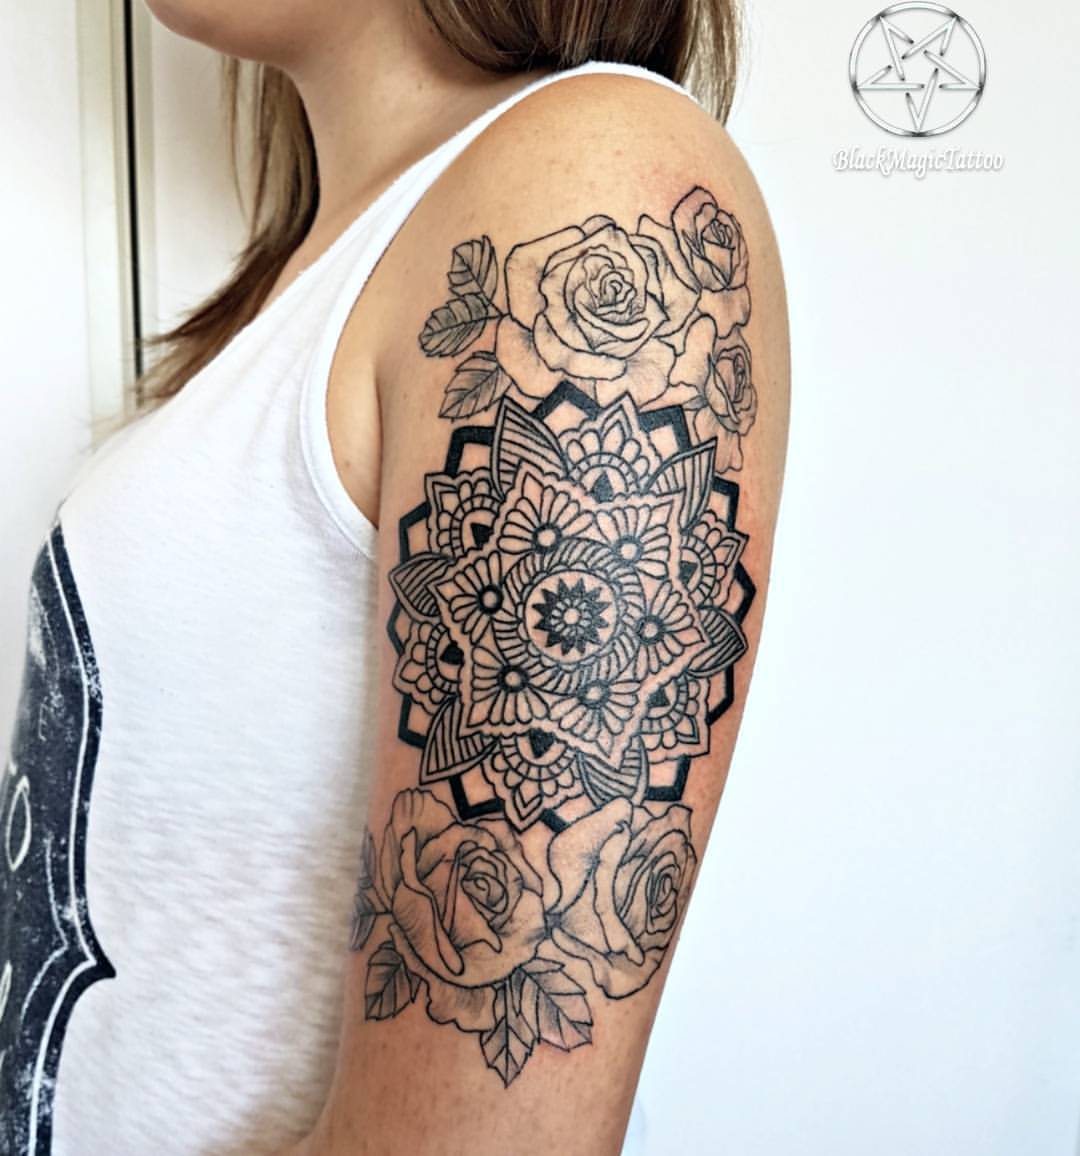 Daniela Mansur Tatuadora Black Magic Tattoo on Tumblr